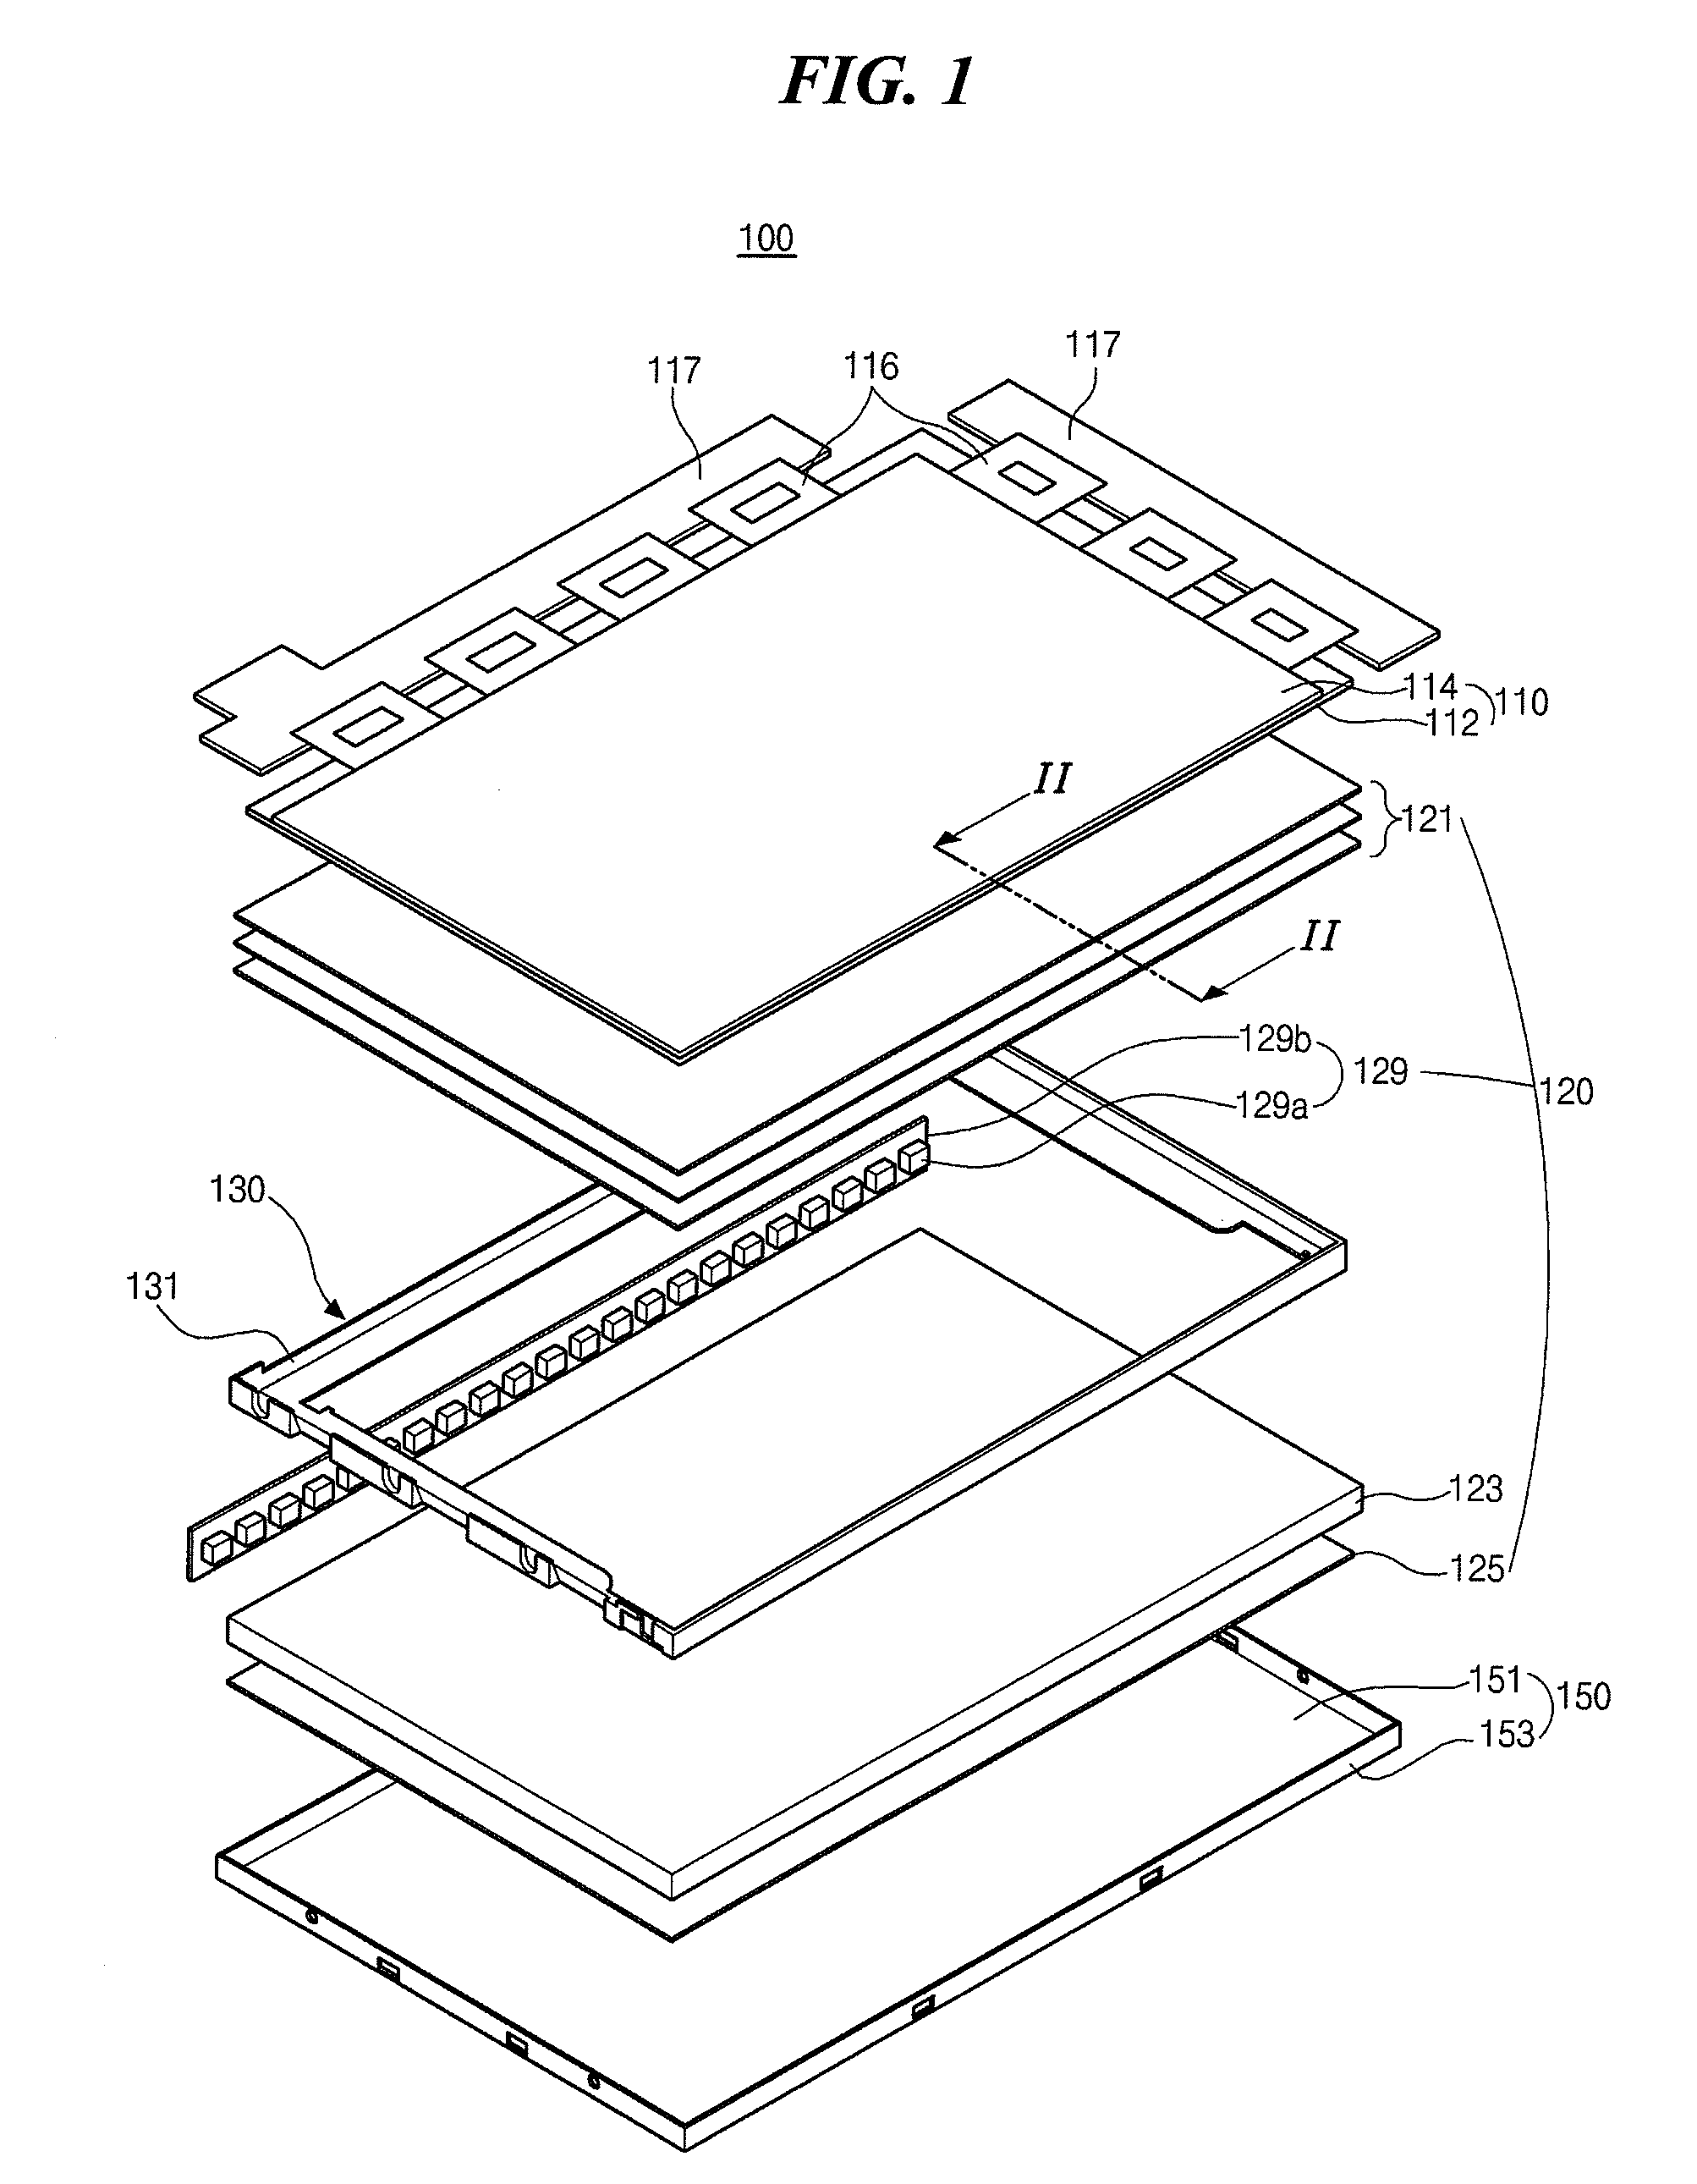 Display device and method of fabricating the same